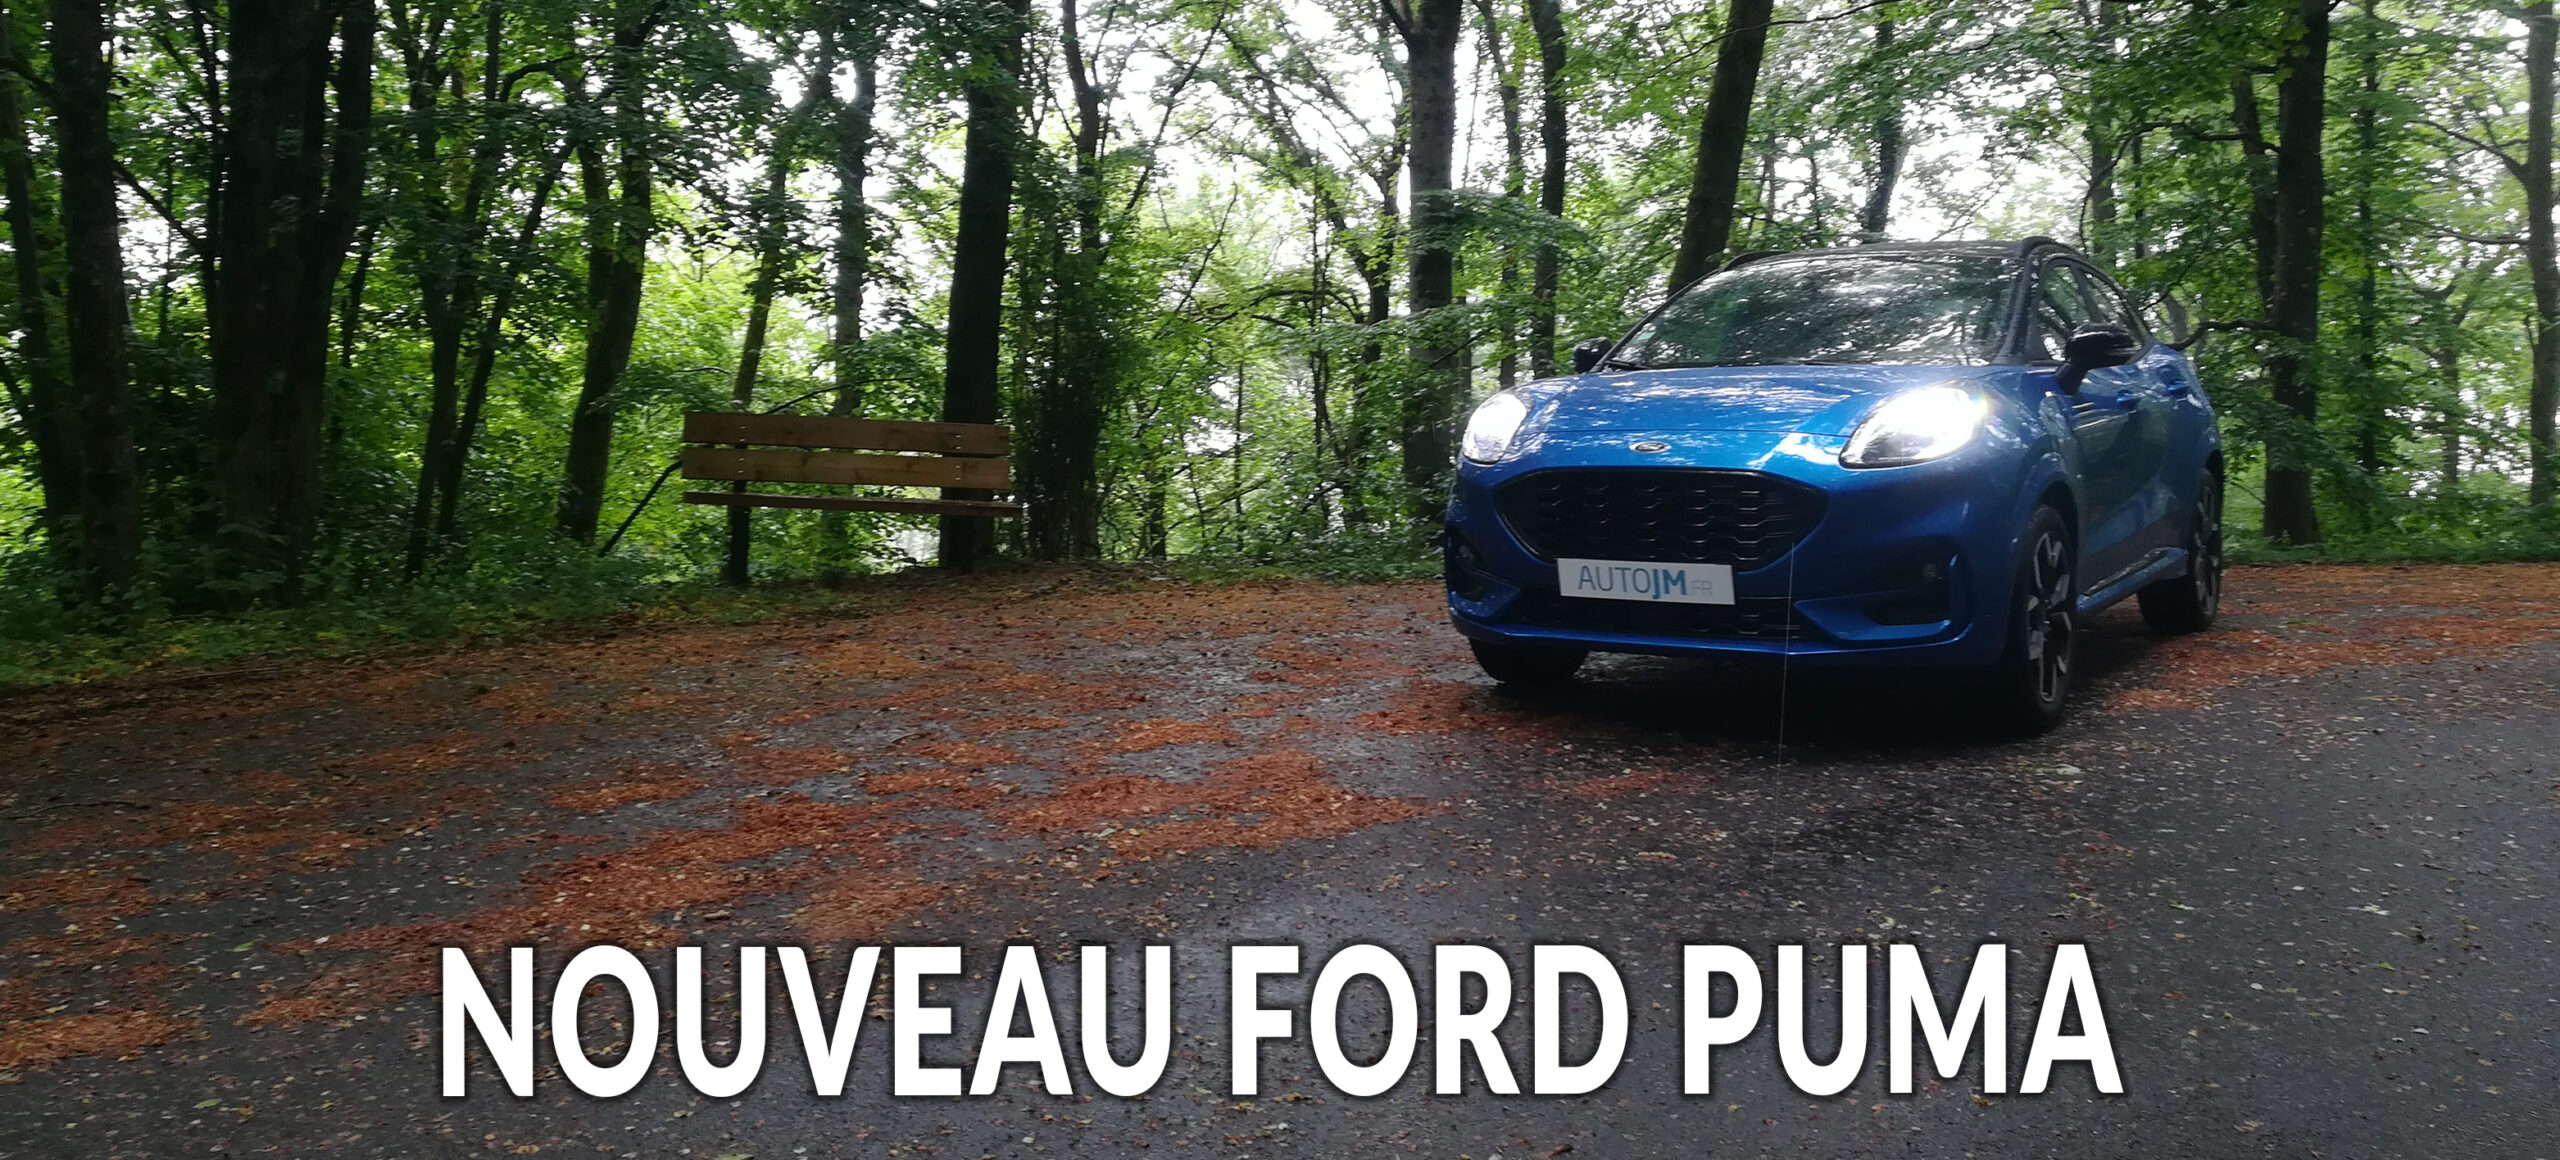 Nouveau Ford Puma : le SUV baroudeur